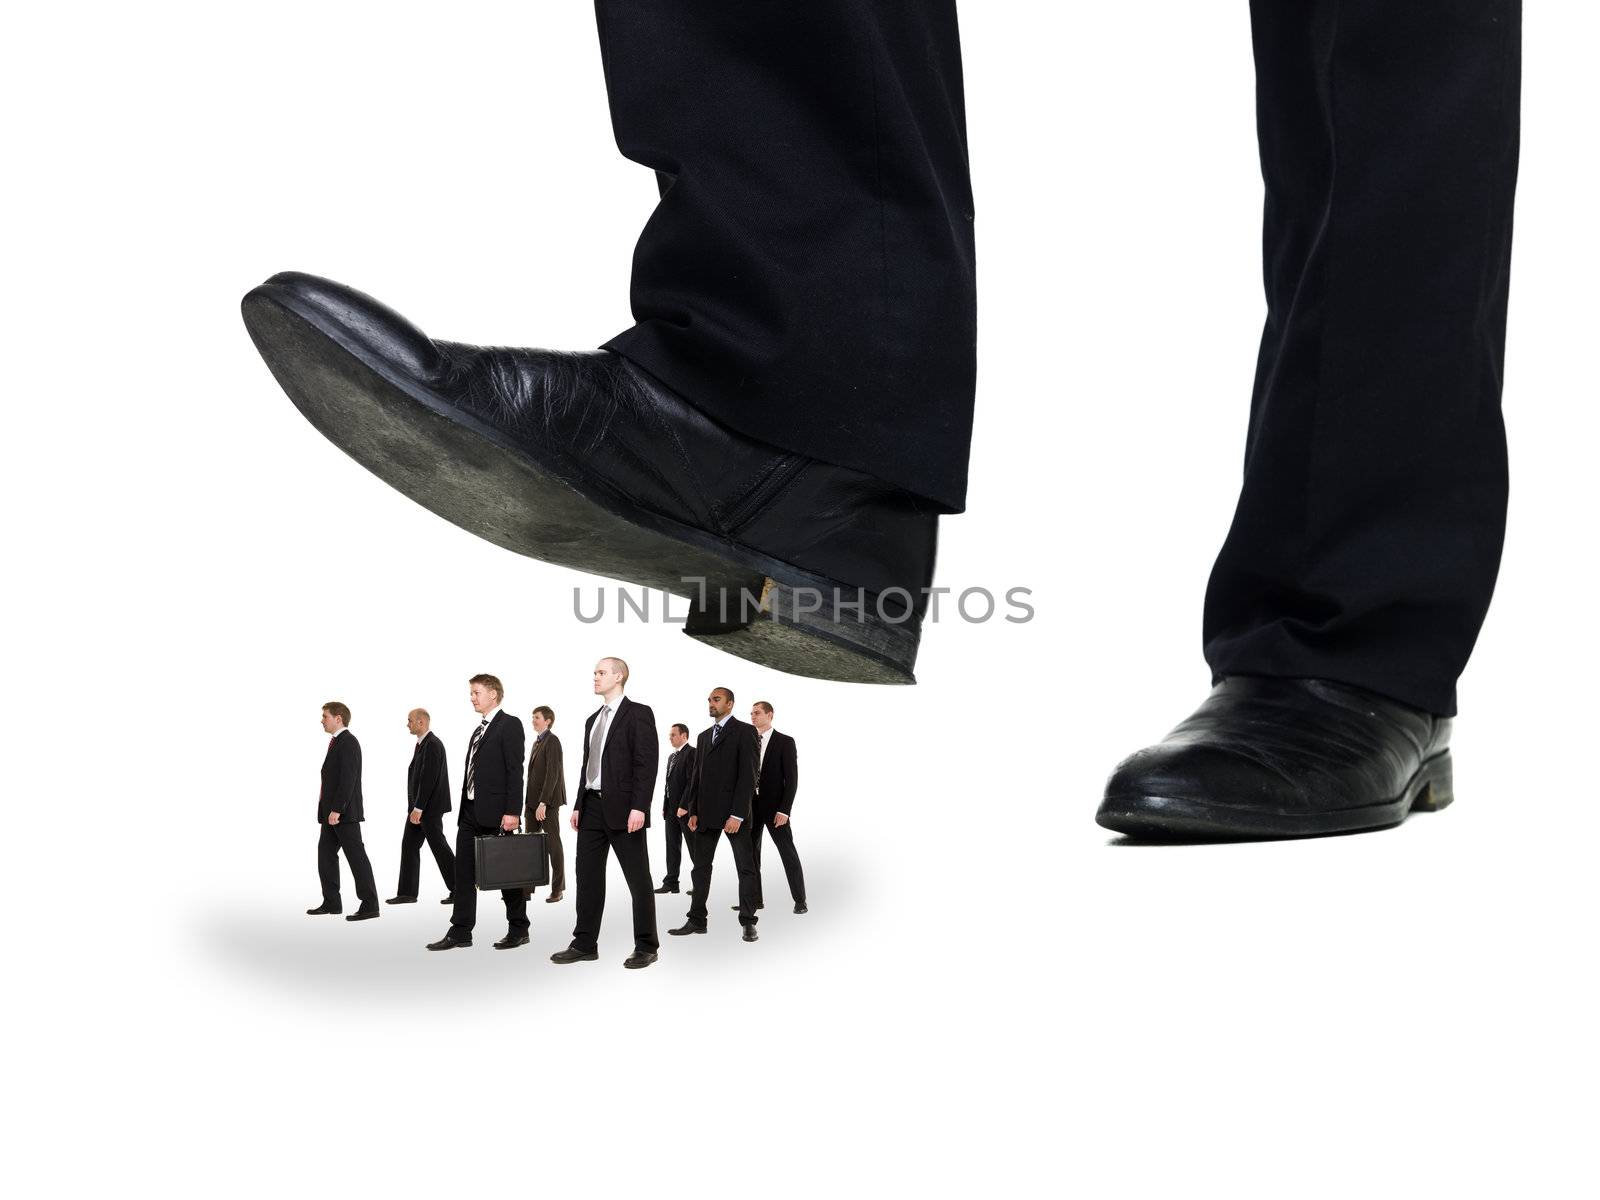 Group of Businessmen under a sole by gemenacom